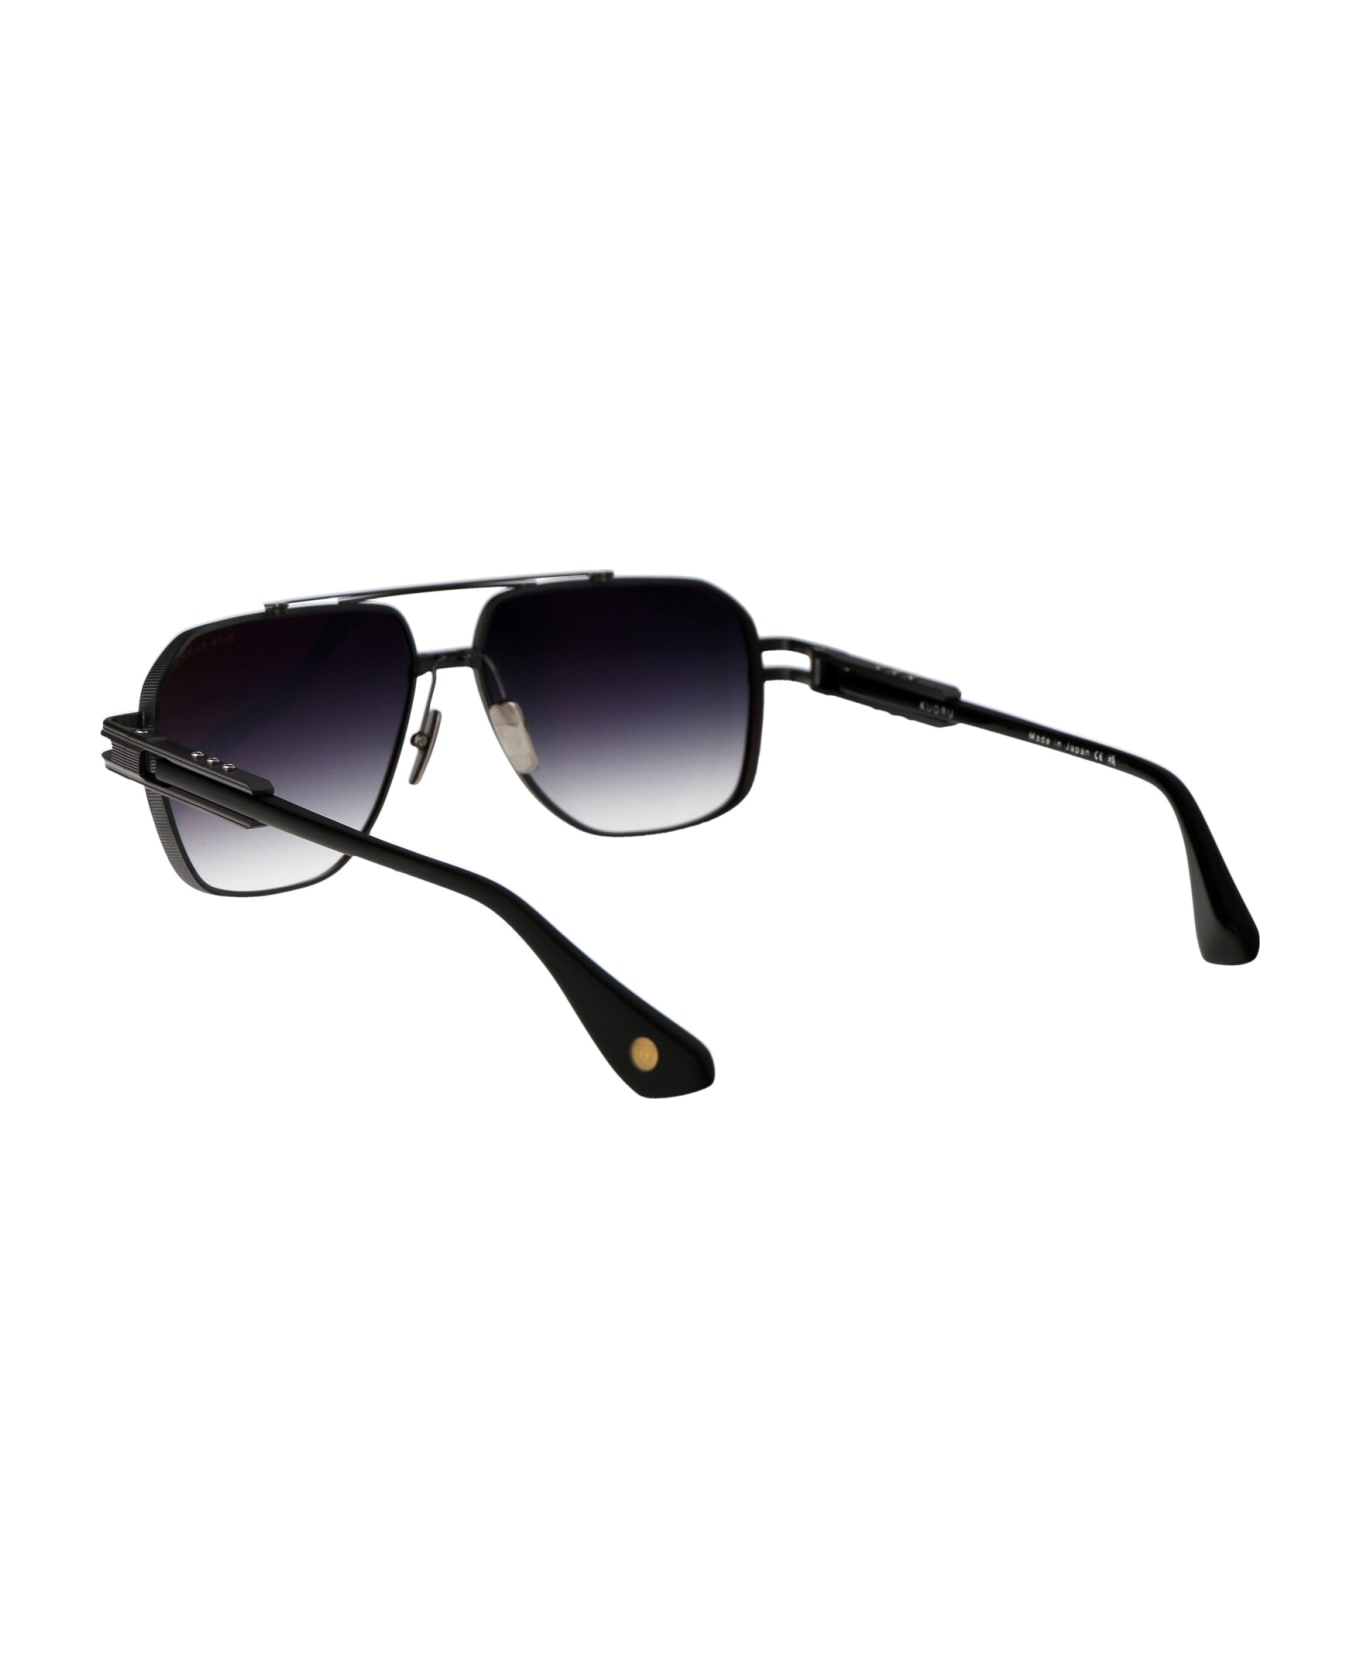 Dita Kudru Sunglasses - 02 BLACK IRON - BLACK PALLADIUM W/ DARK GREYTO CLEAR GRADIENT